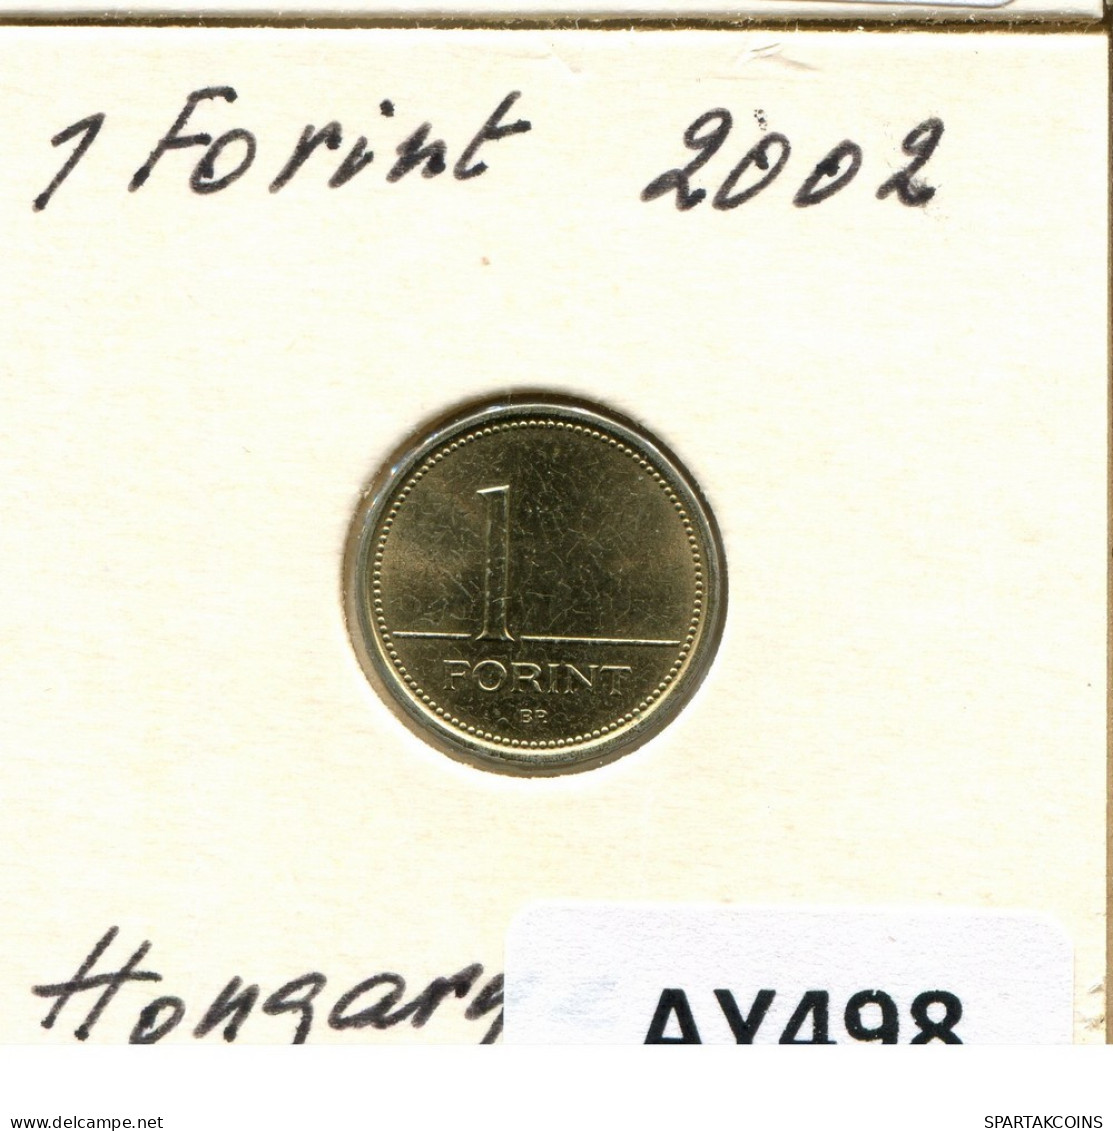 1 FORINT 2002 SIEBENBÜRGEN HUNGARY Münze #AY498.D.A - Hungría